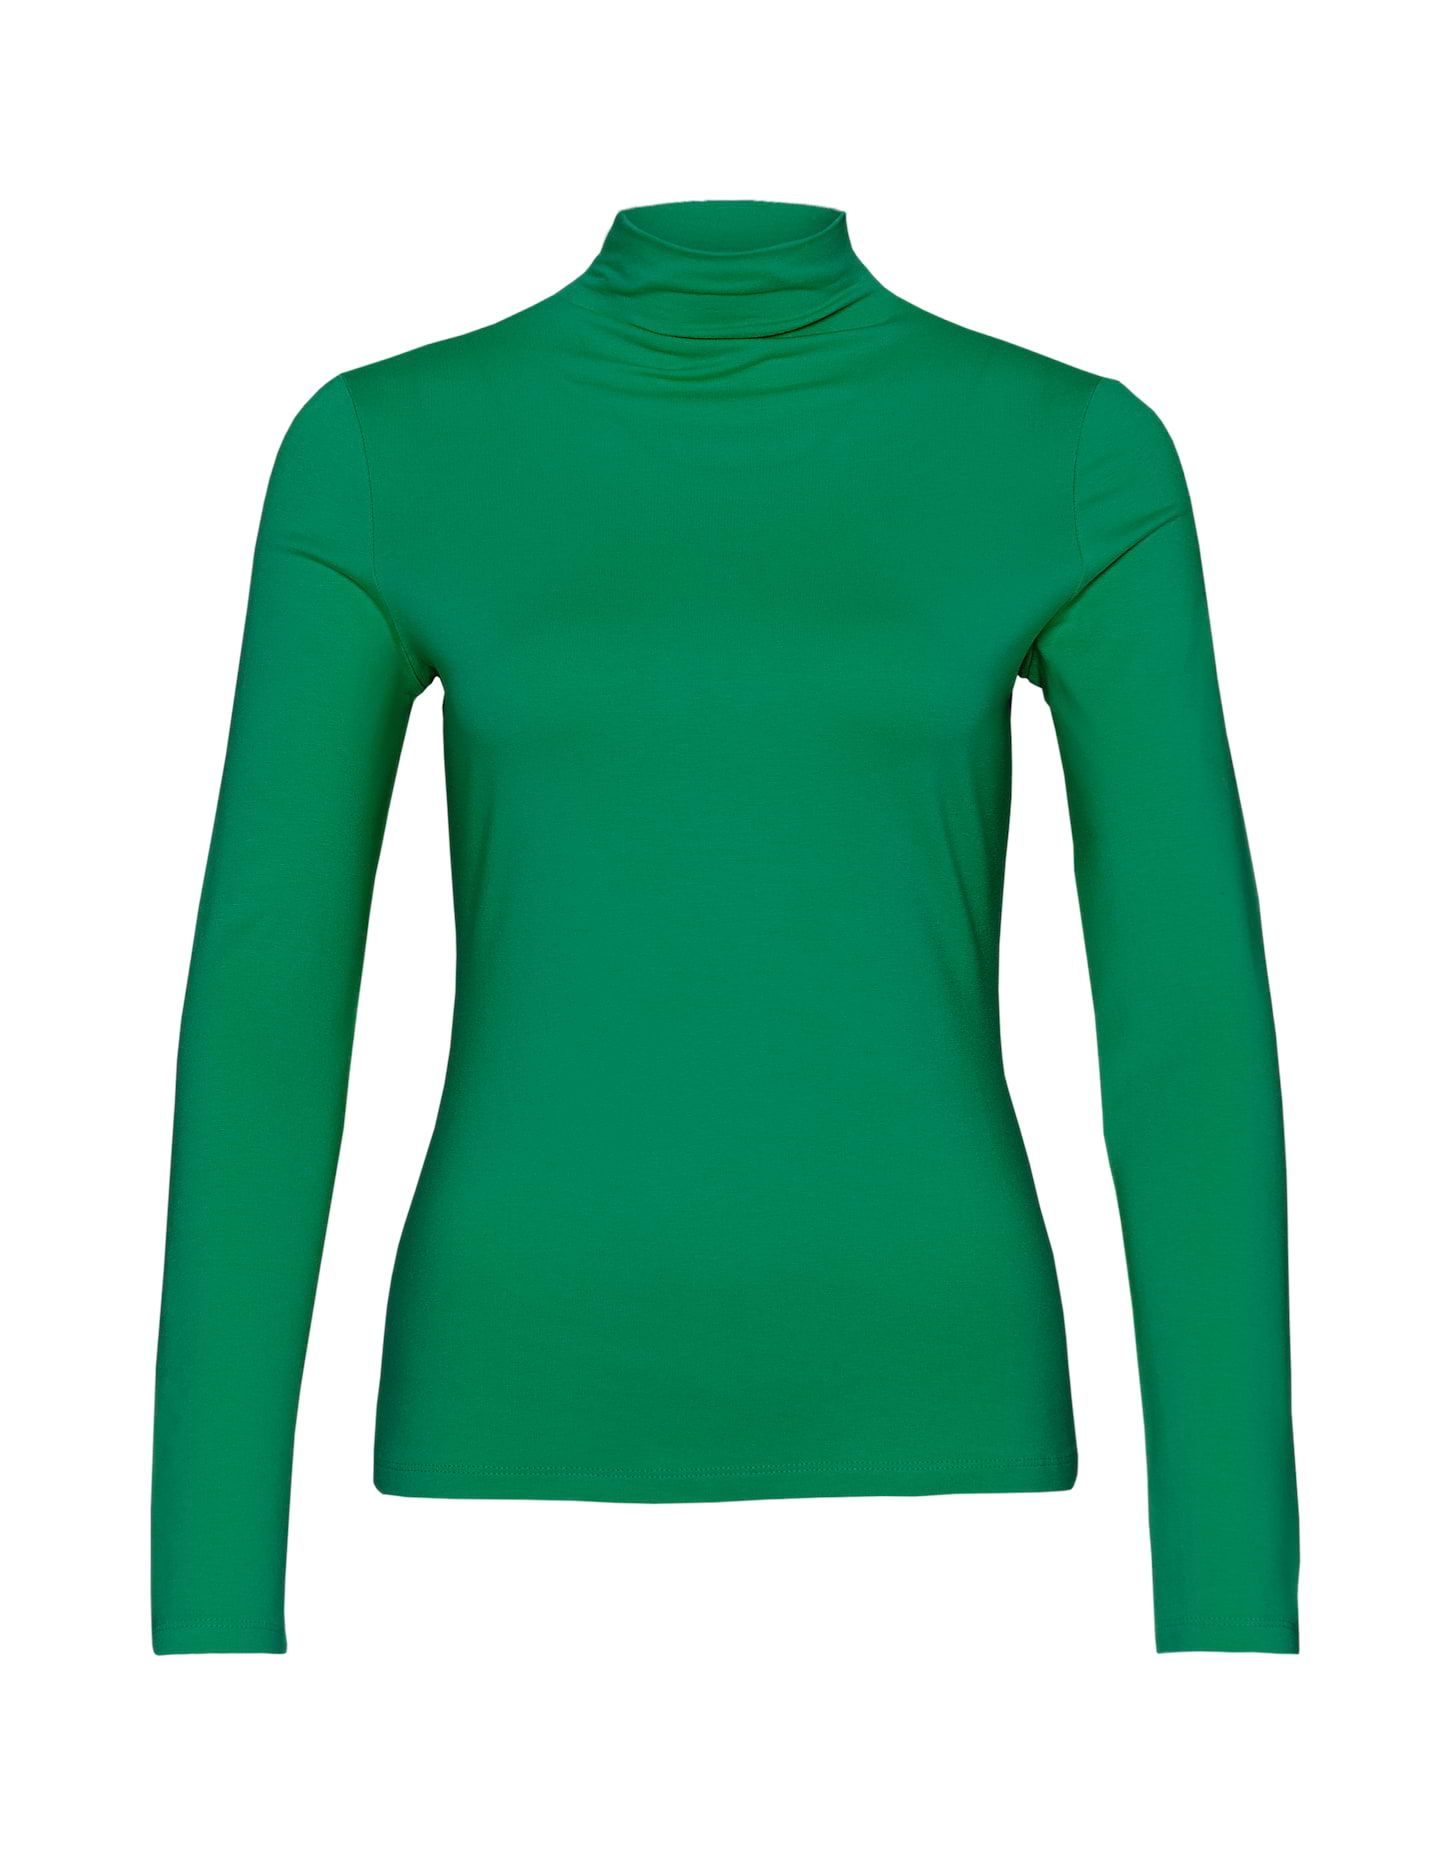 T-shirt OPUS sayar tulip green online bestellen | Henri\'s Fashion